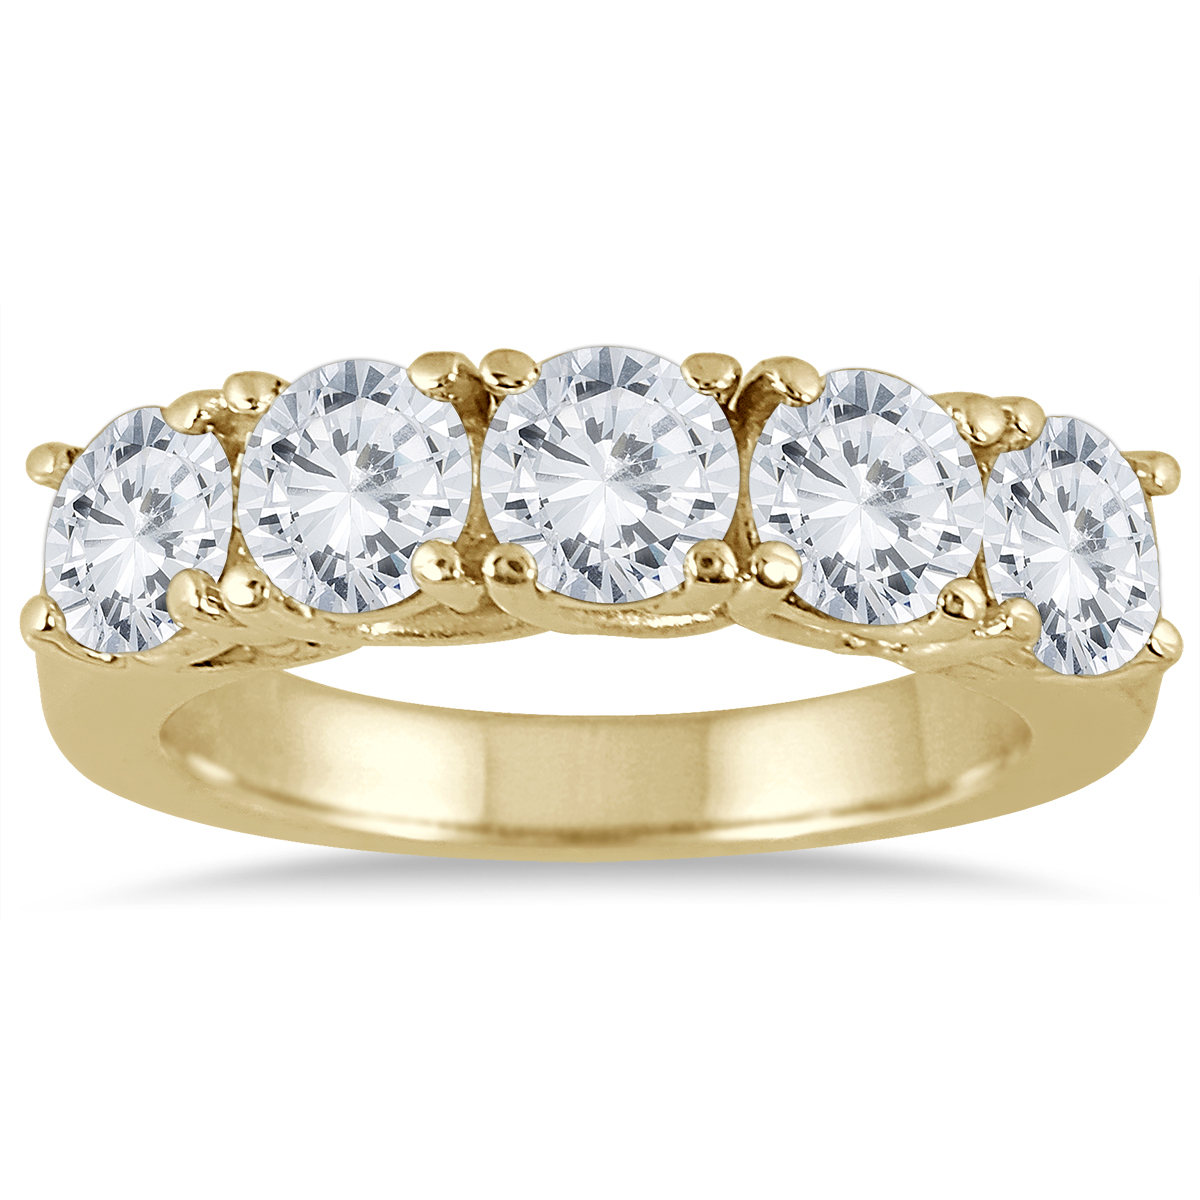 2 1/2 Carat TW Five Stone Diamond Wedding Band in 14K Yellow Gold